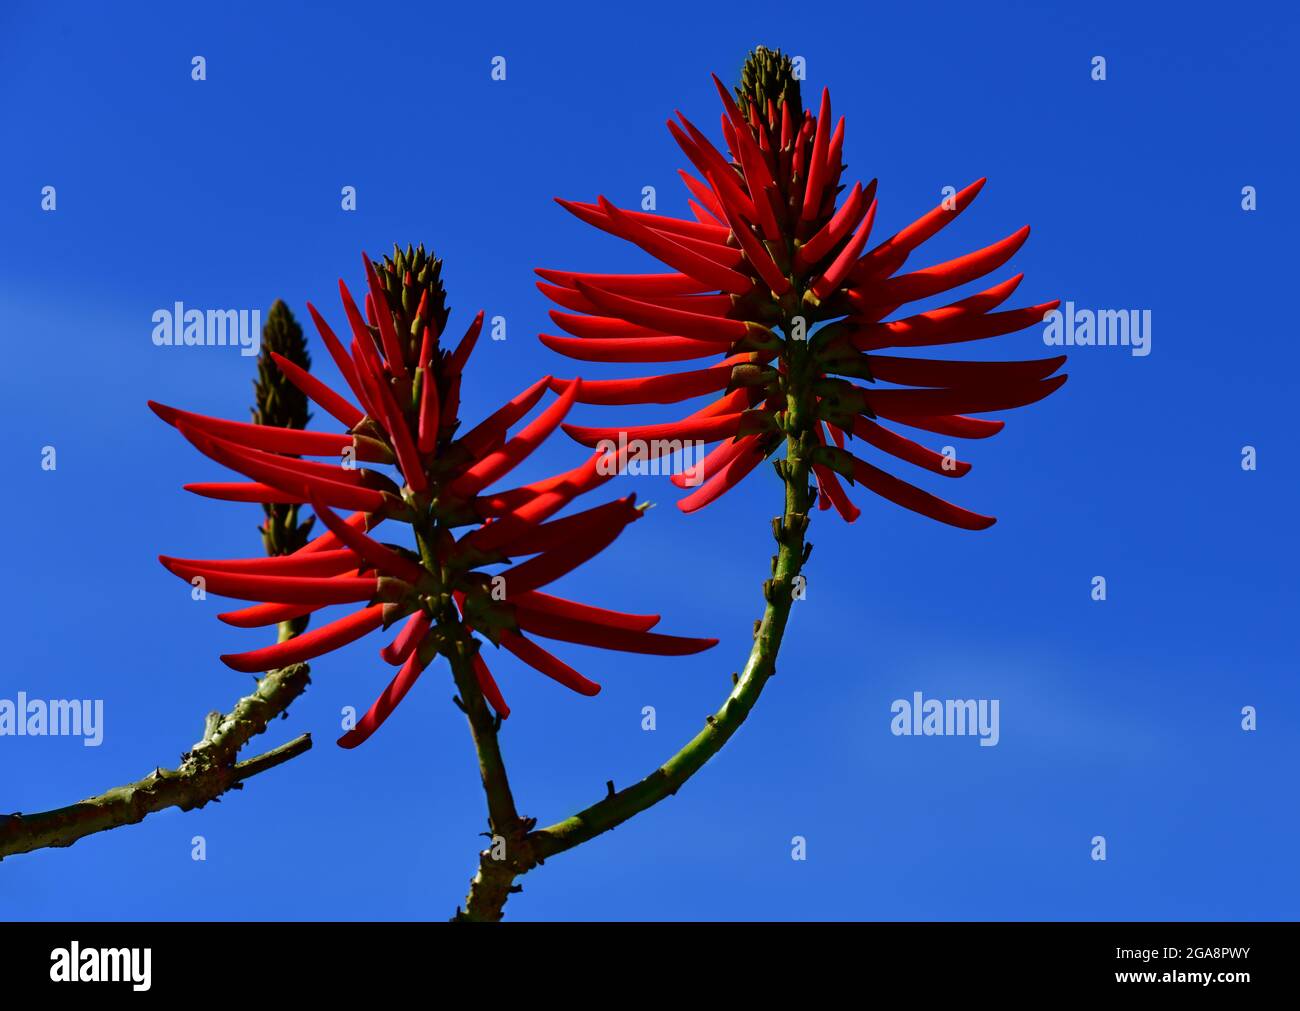 Coral tree (Erythrina speciosa) flowering, native plat to Brazil Stock Photo